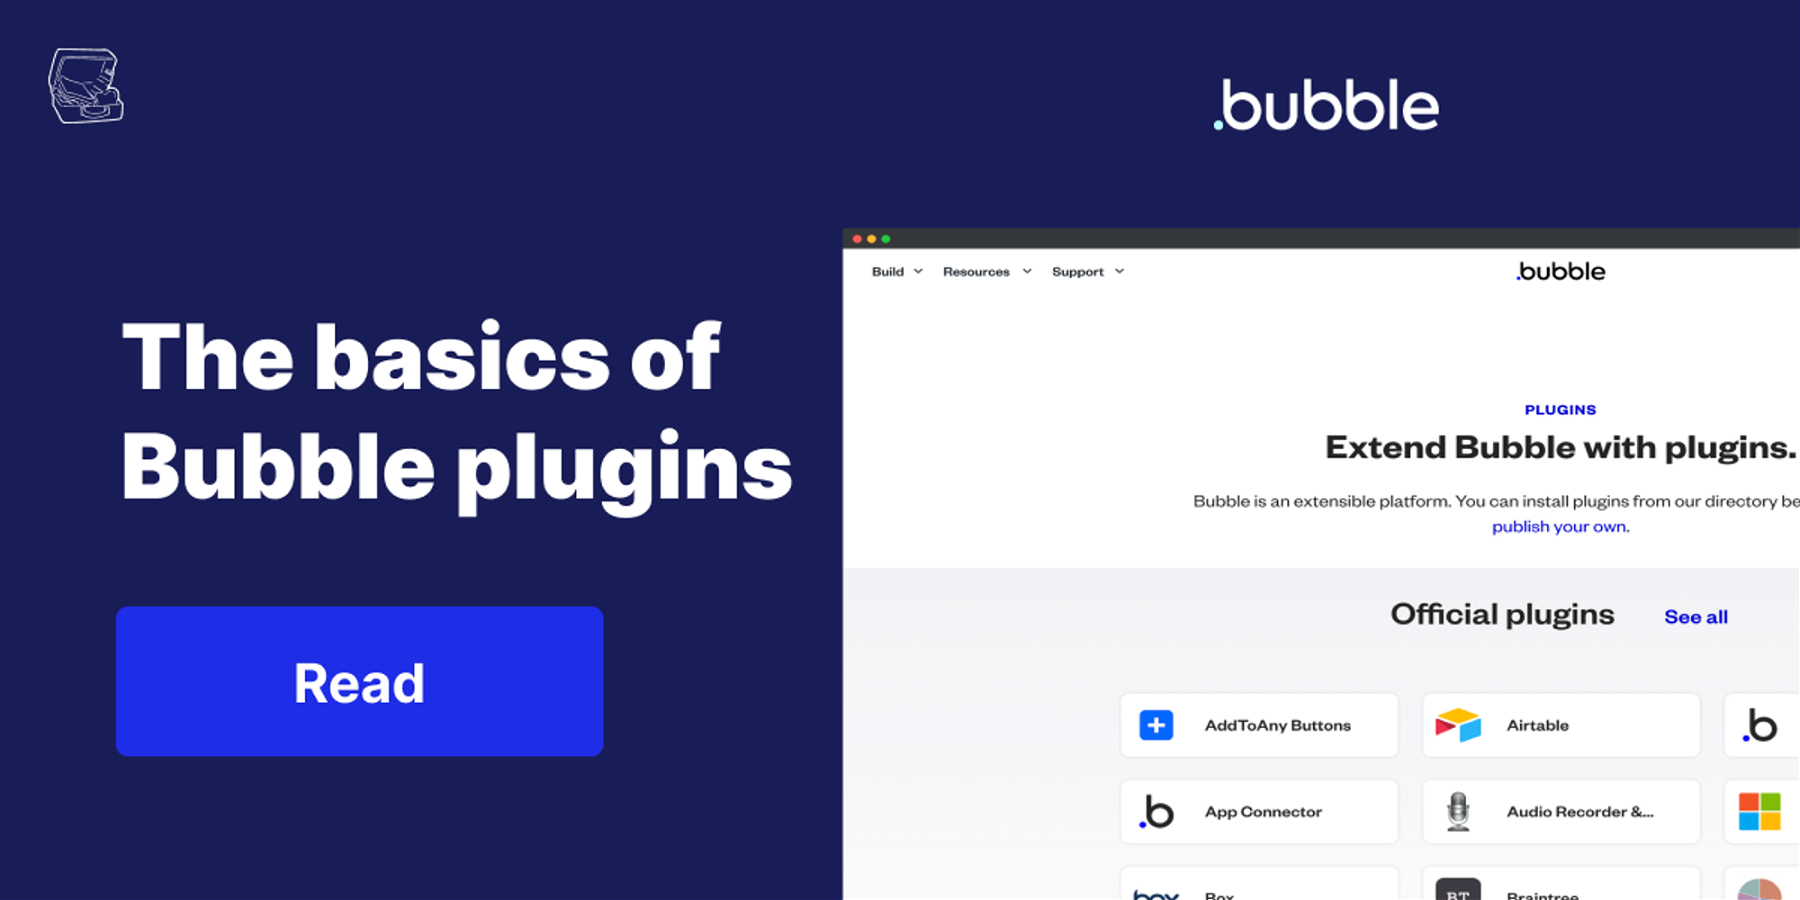 The basics of Bubble plugins